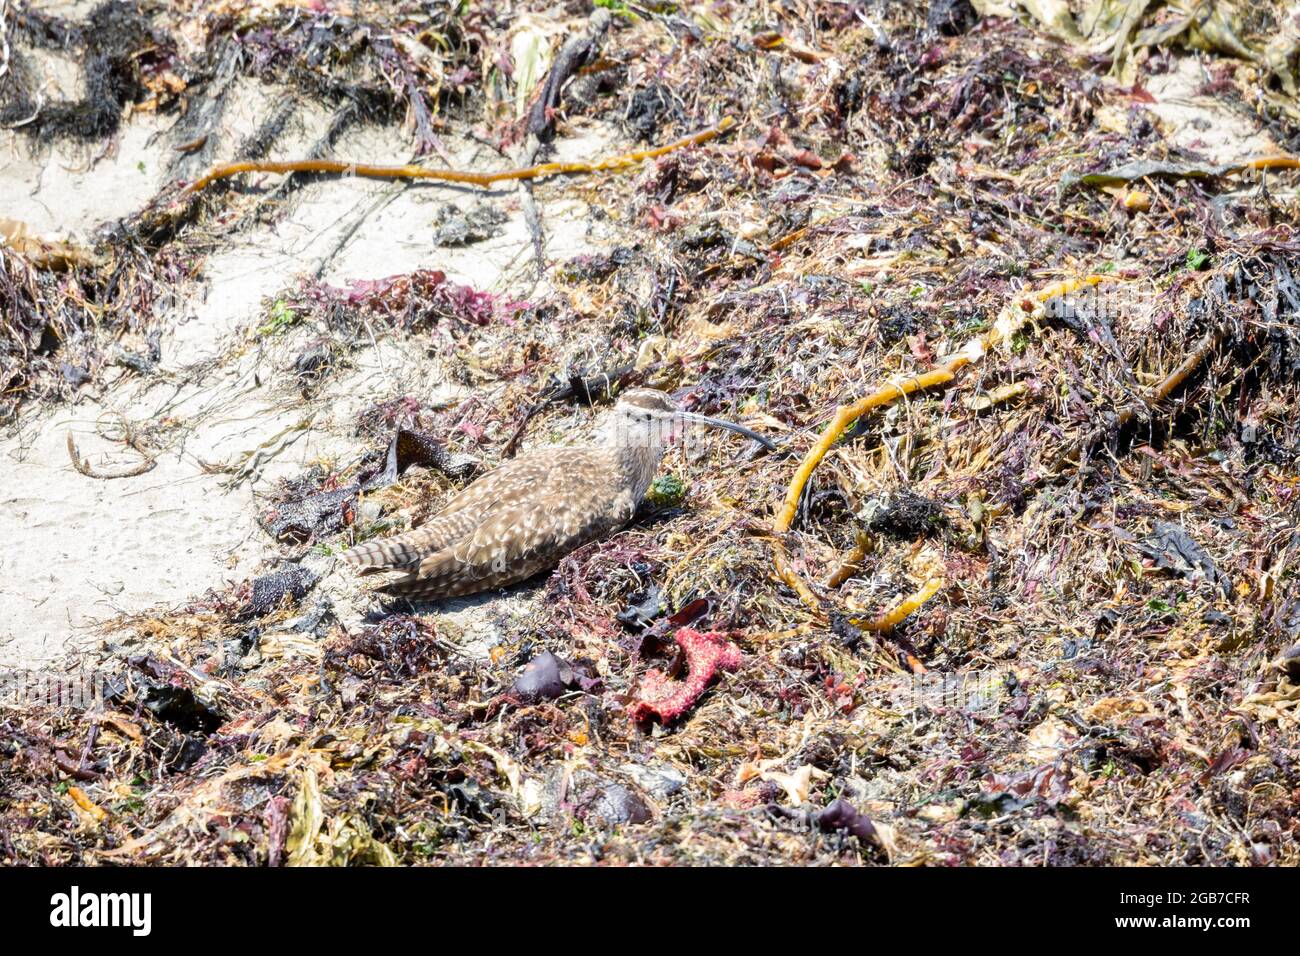 Whimbrel Lying in Seaweed on Beach Stock Photo